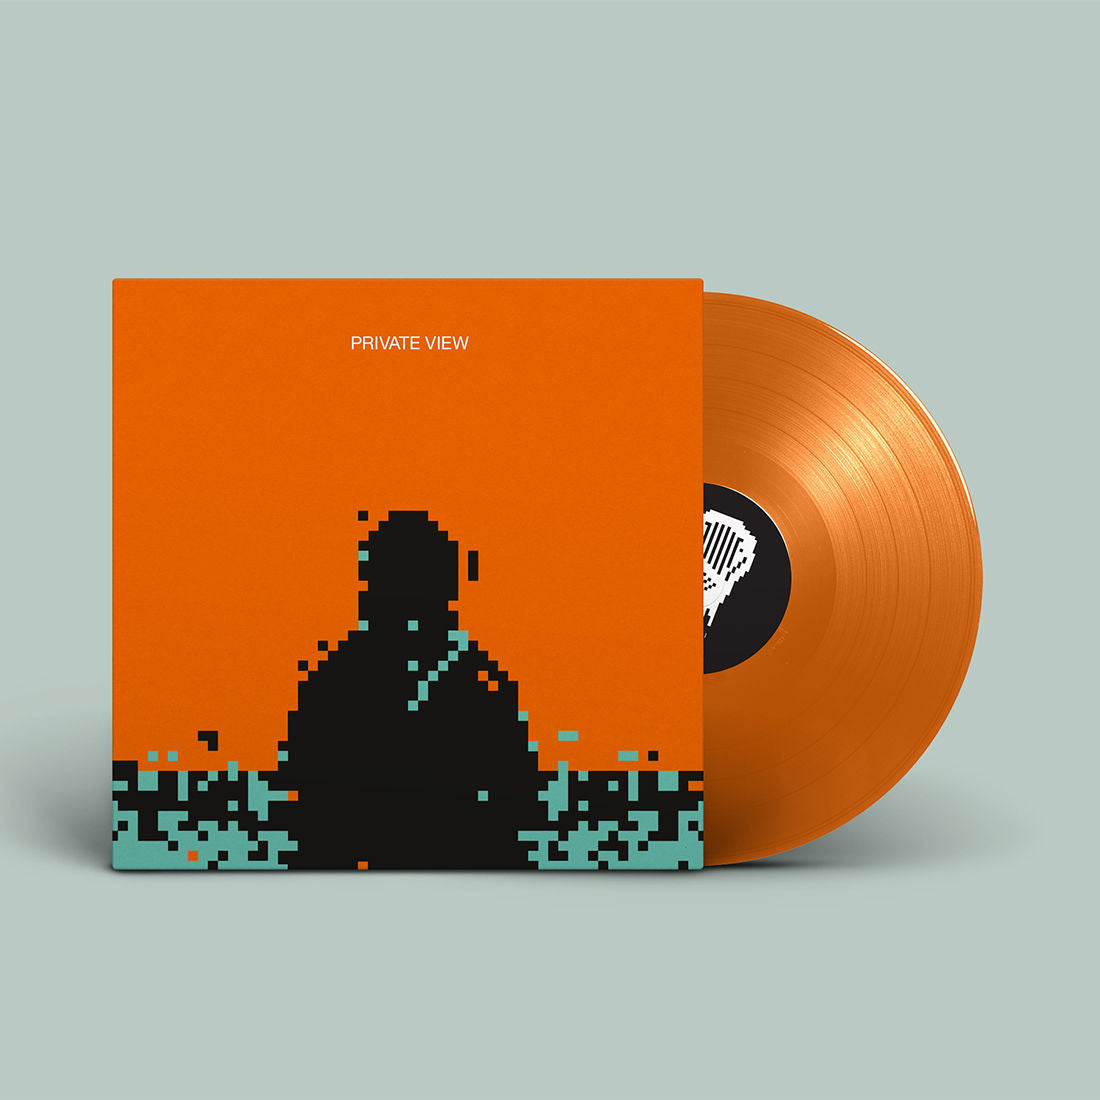 Private View: Limited Orange Vinyl LP